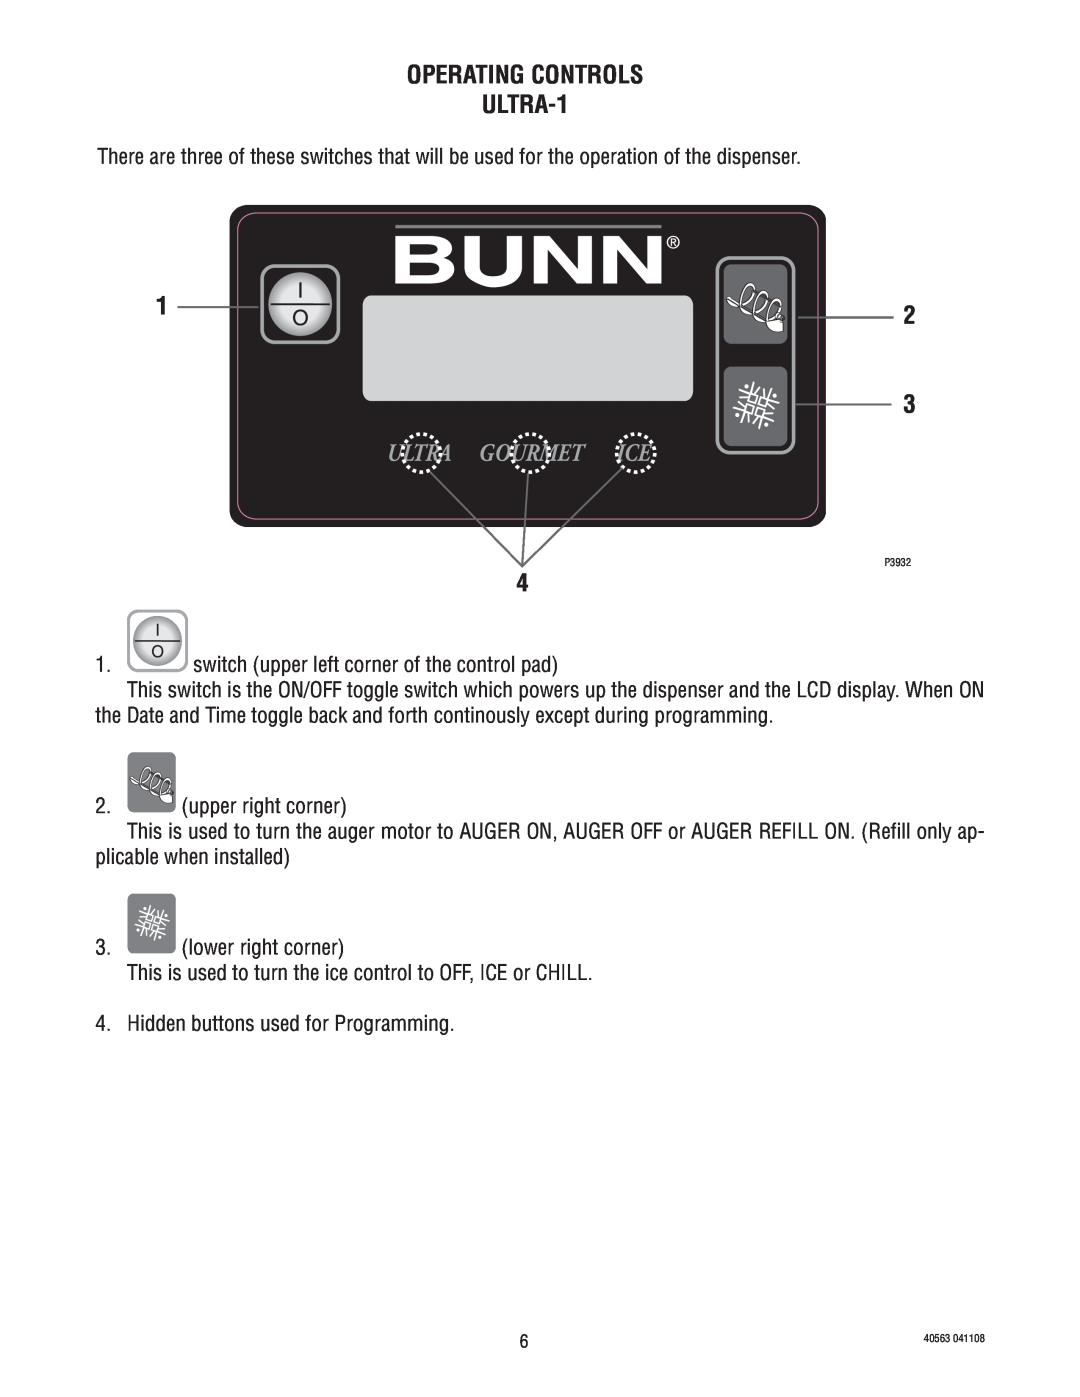 Bunn service manual OPERATING CONTROLS ULTRA-1 